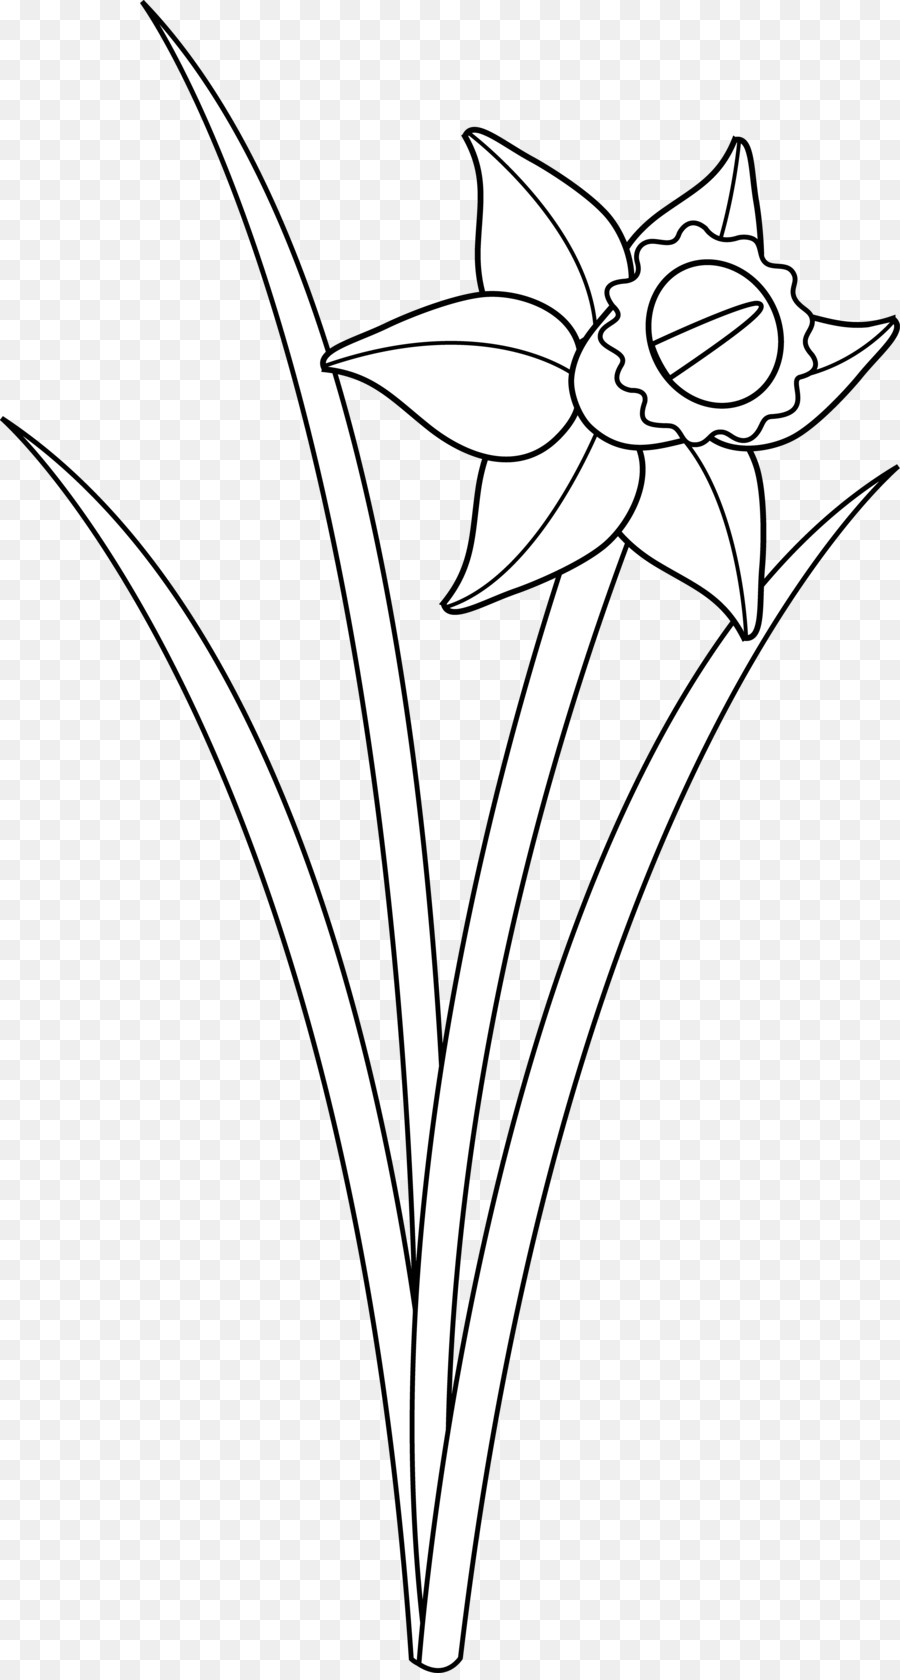 Black and white flower. Daffodil clipart clip art